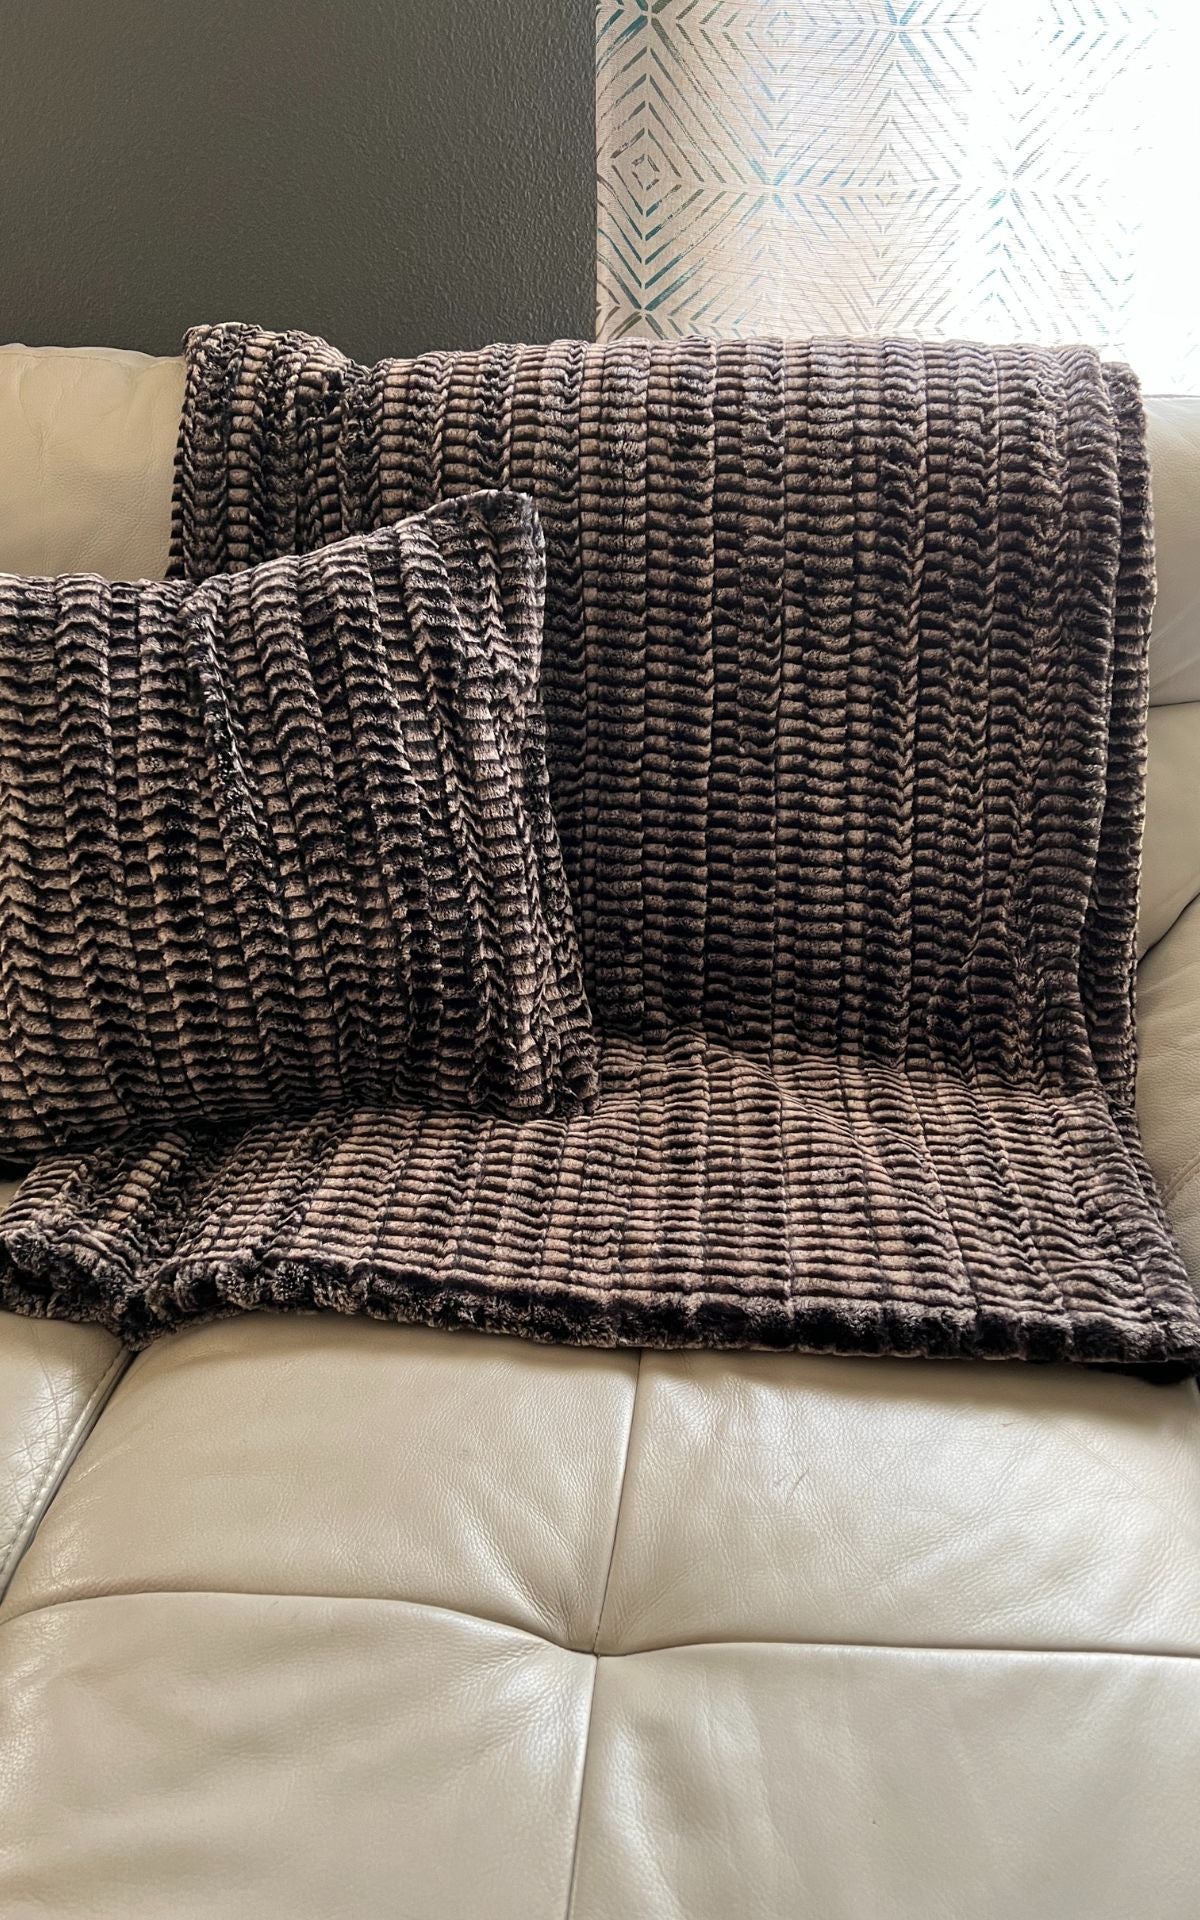 Throw Blanket – Outlaw Custom Made